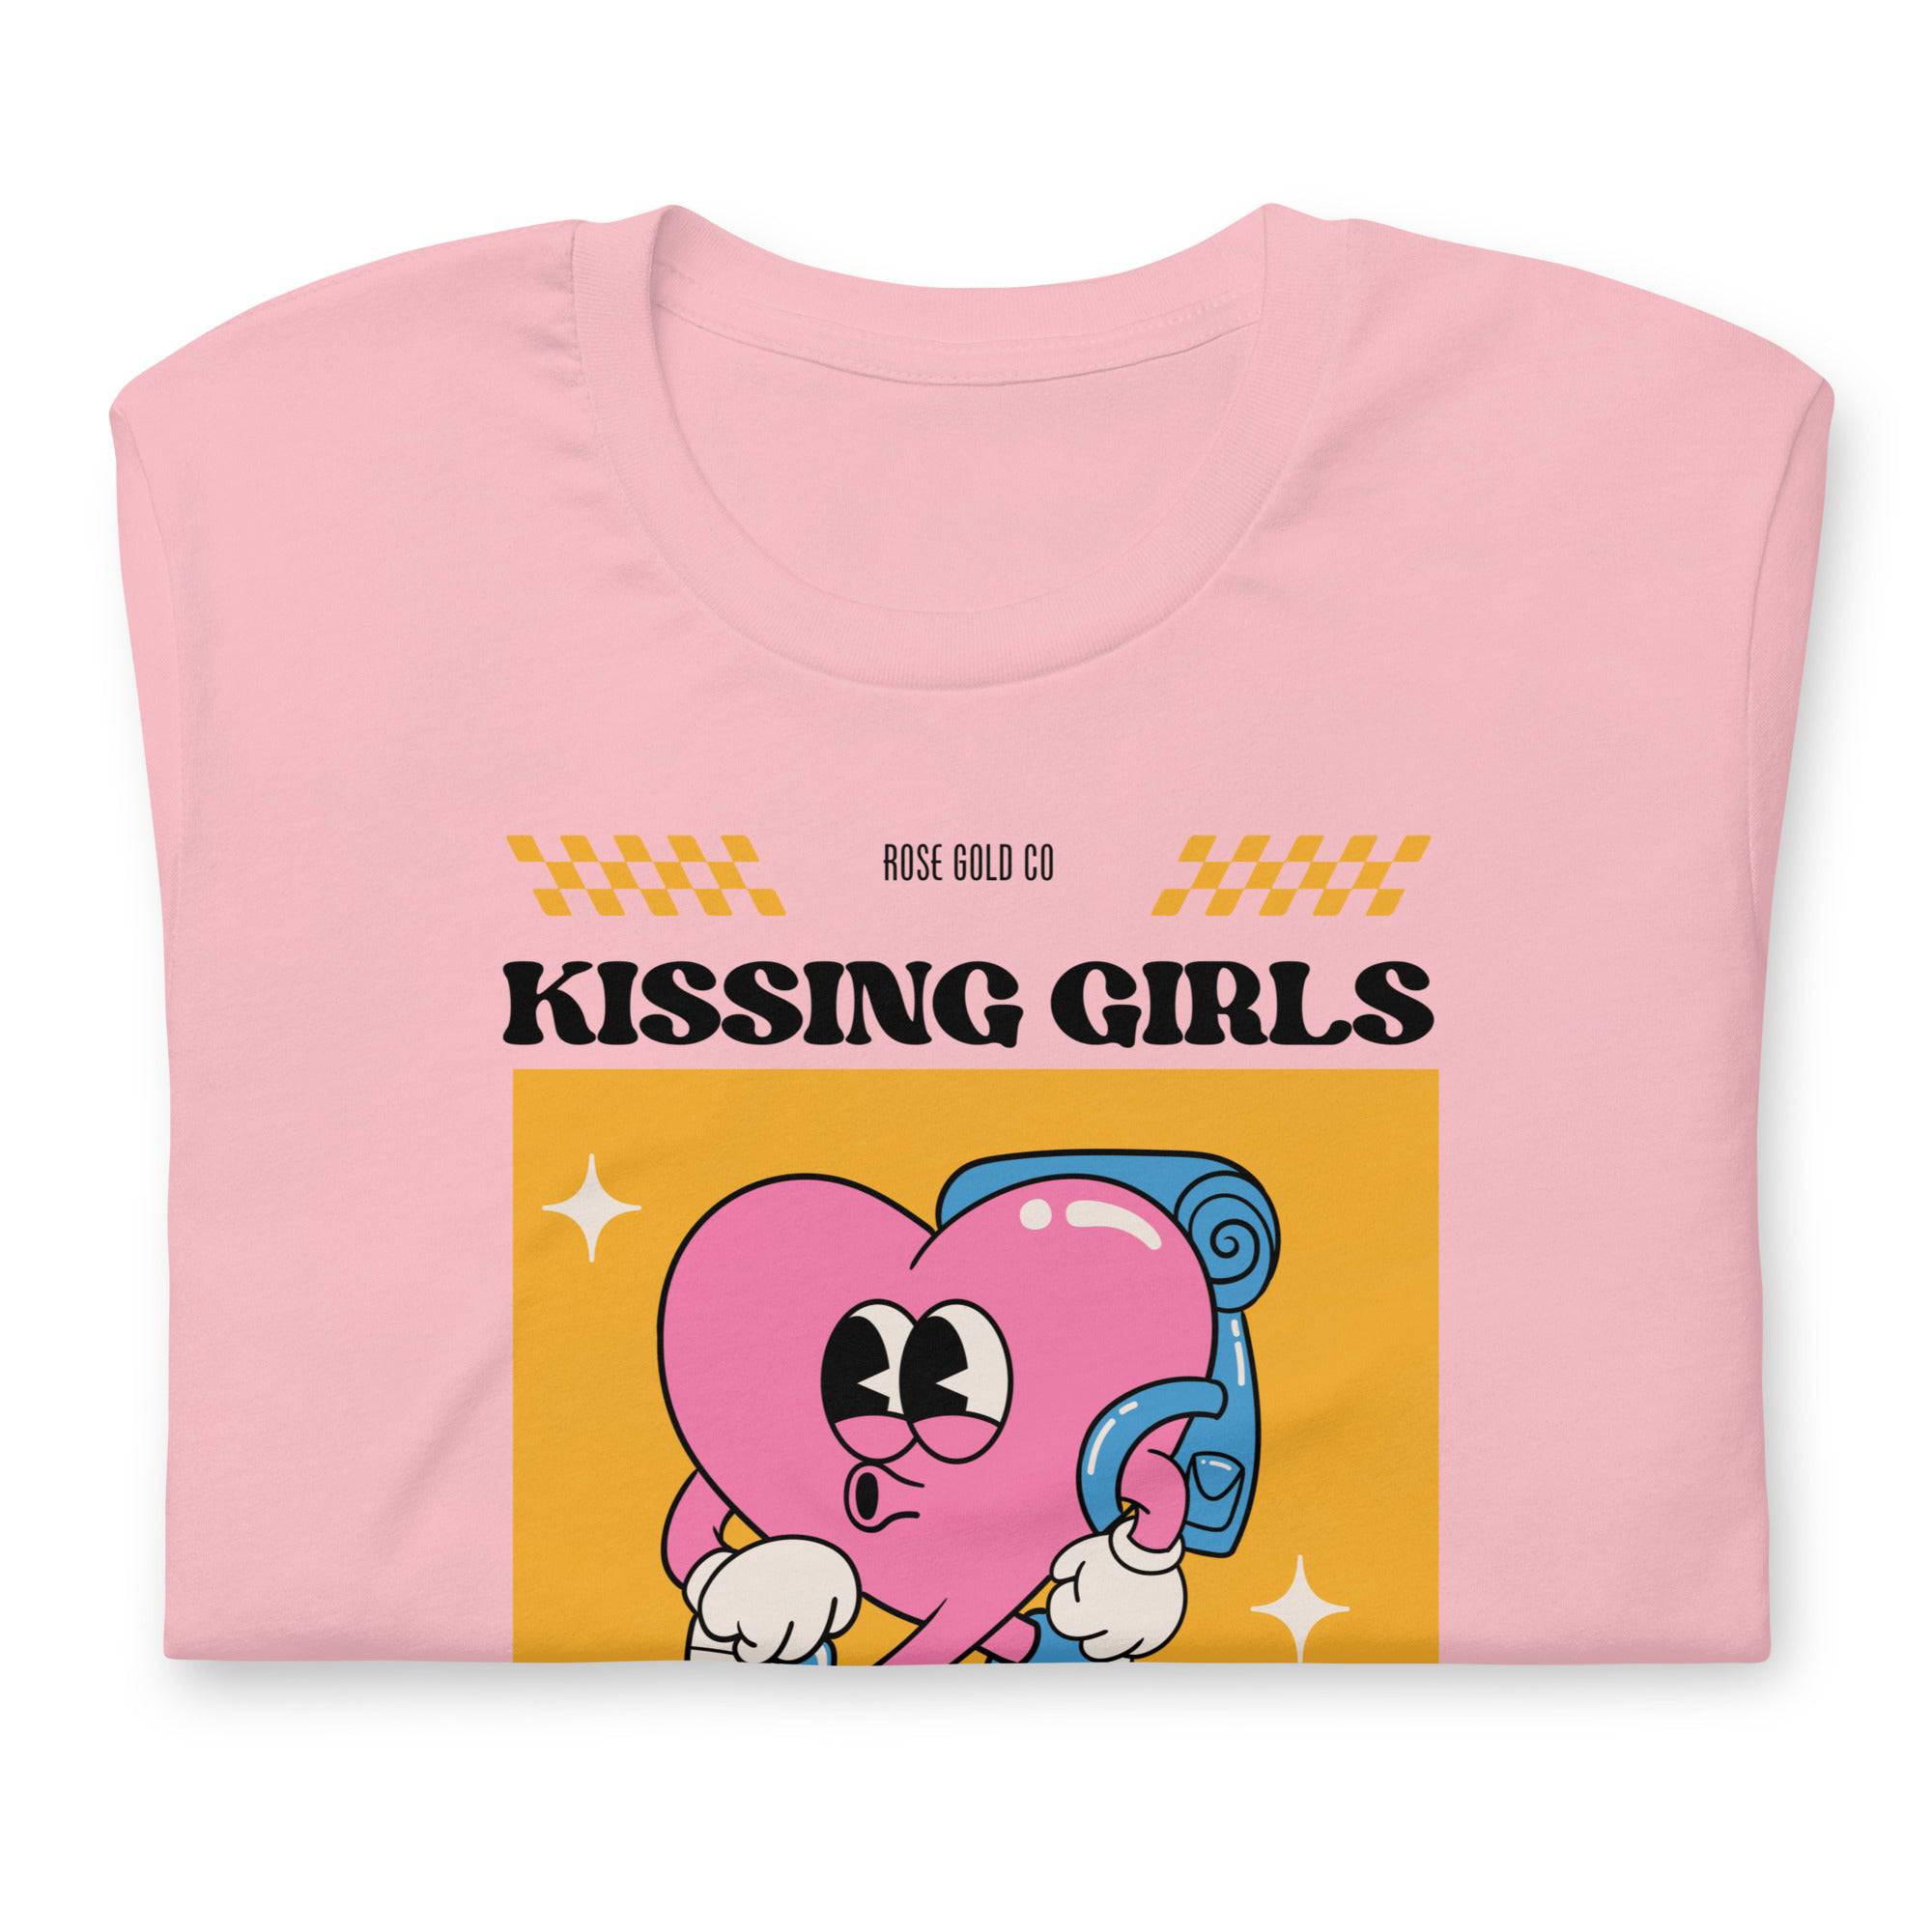 Kissing Girls Living My Best Life t-shirt - Rose Gold Co. Shop